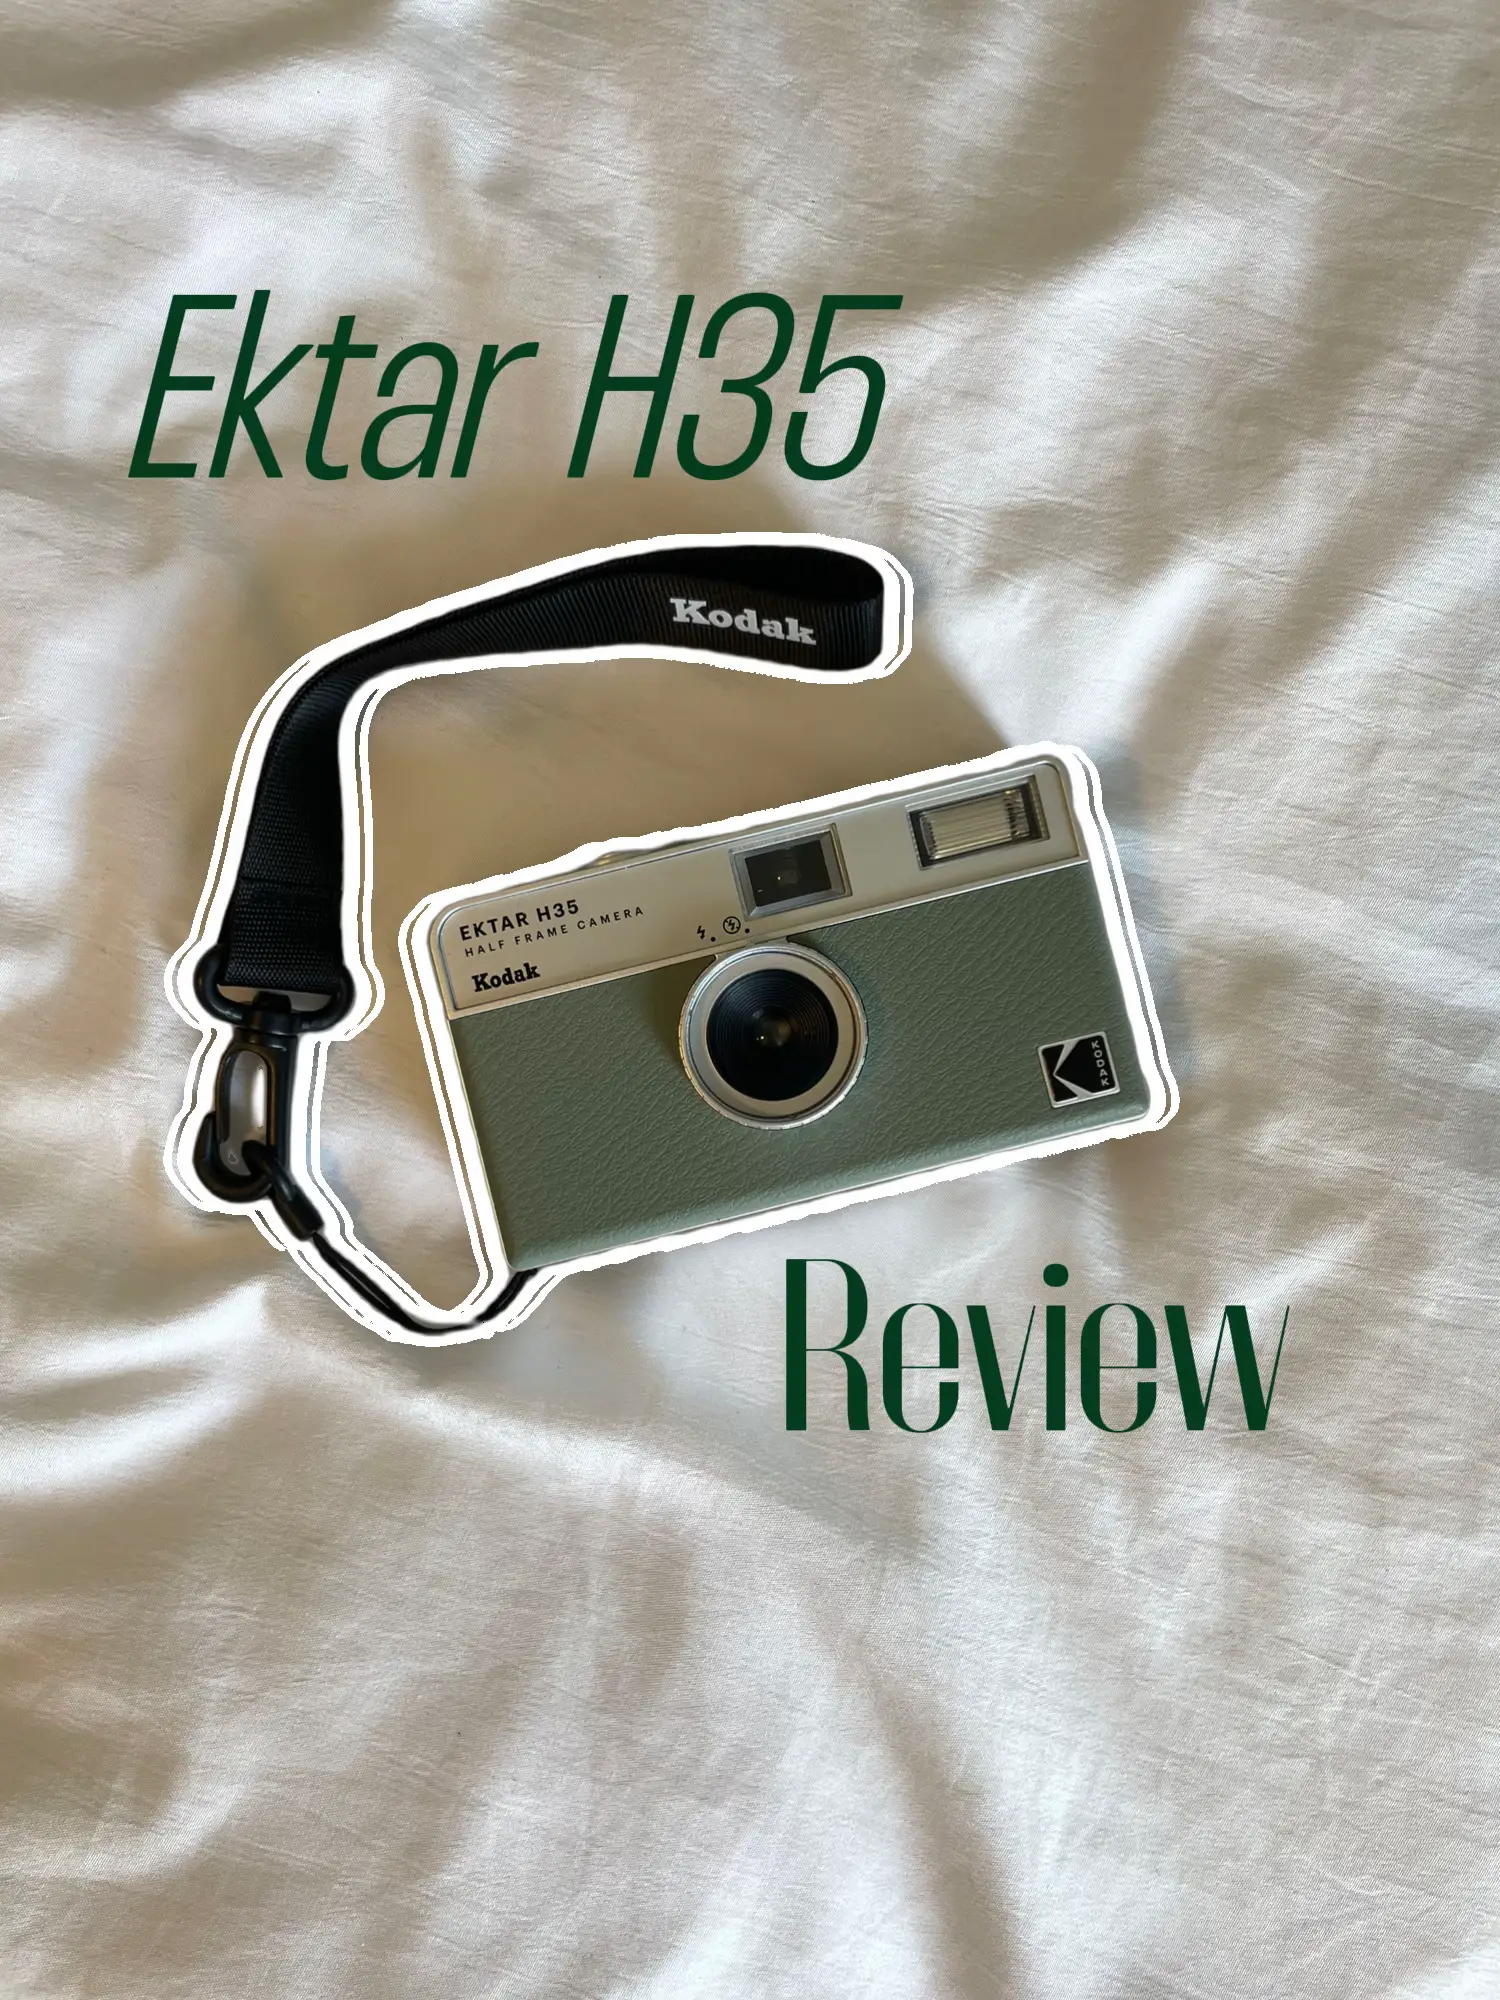 The Kodak Ektar H35 Shoots Two Photos Per Frame of 35mm Film